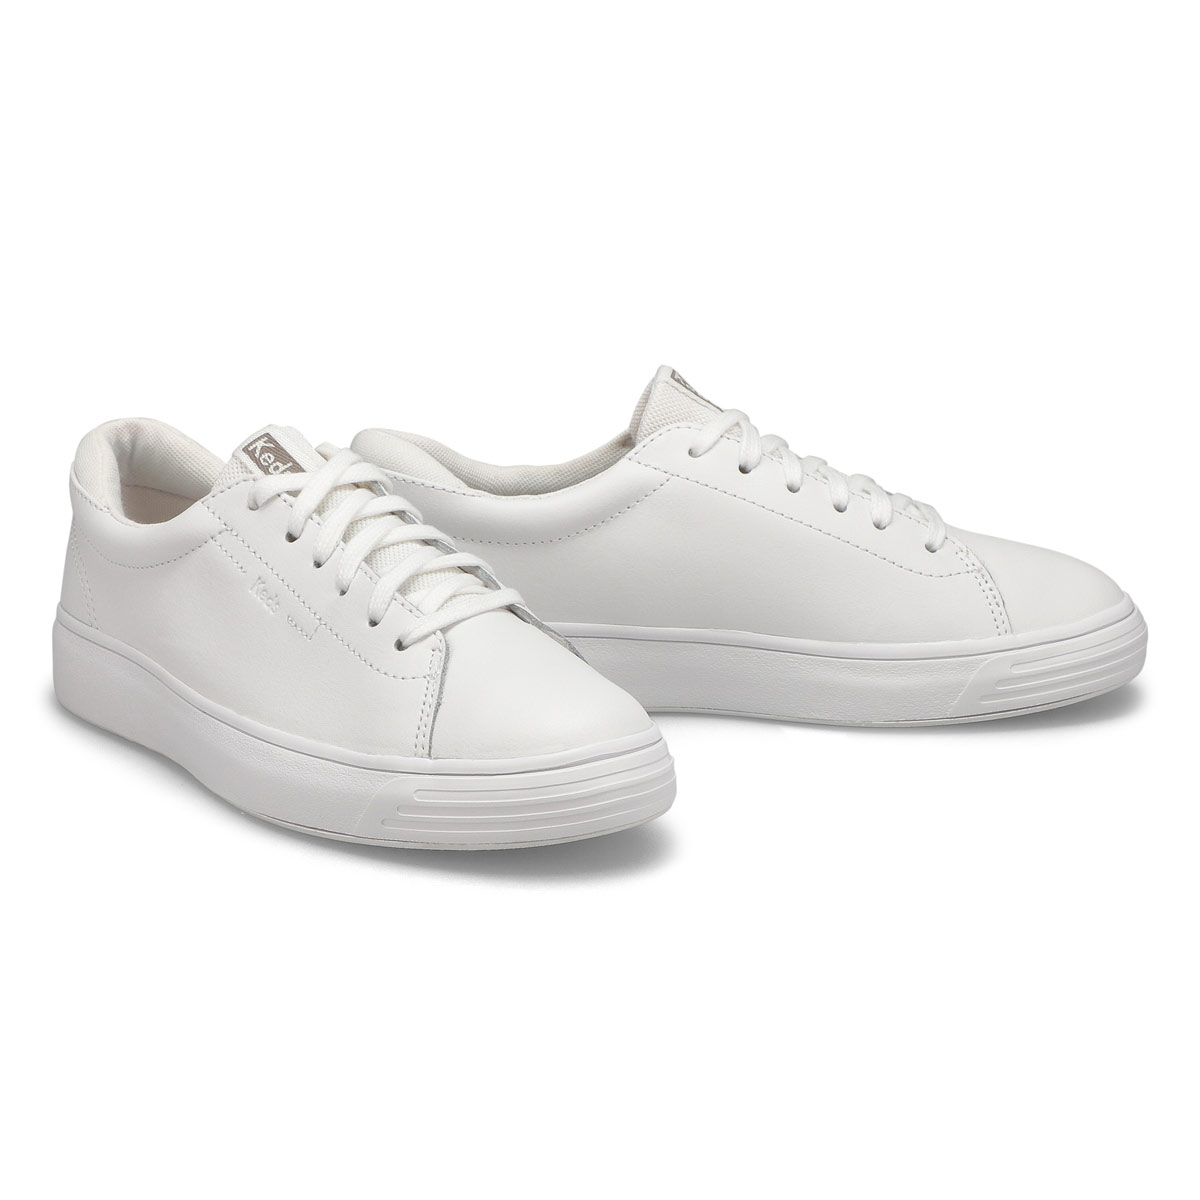 Women's Alley Leather Sneaker - White